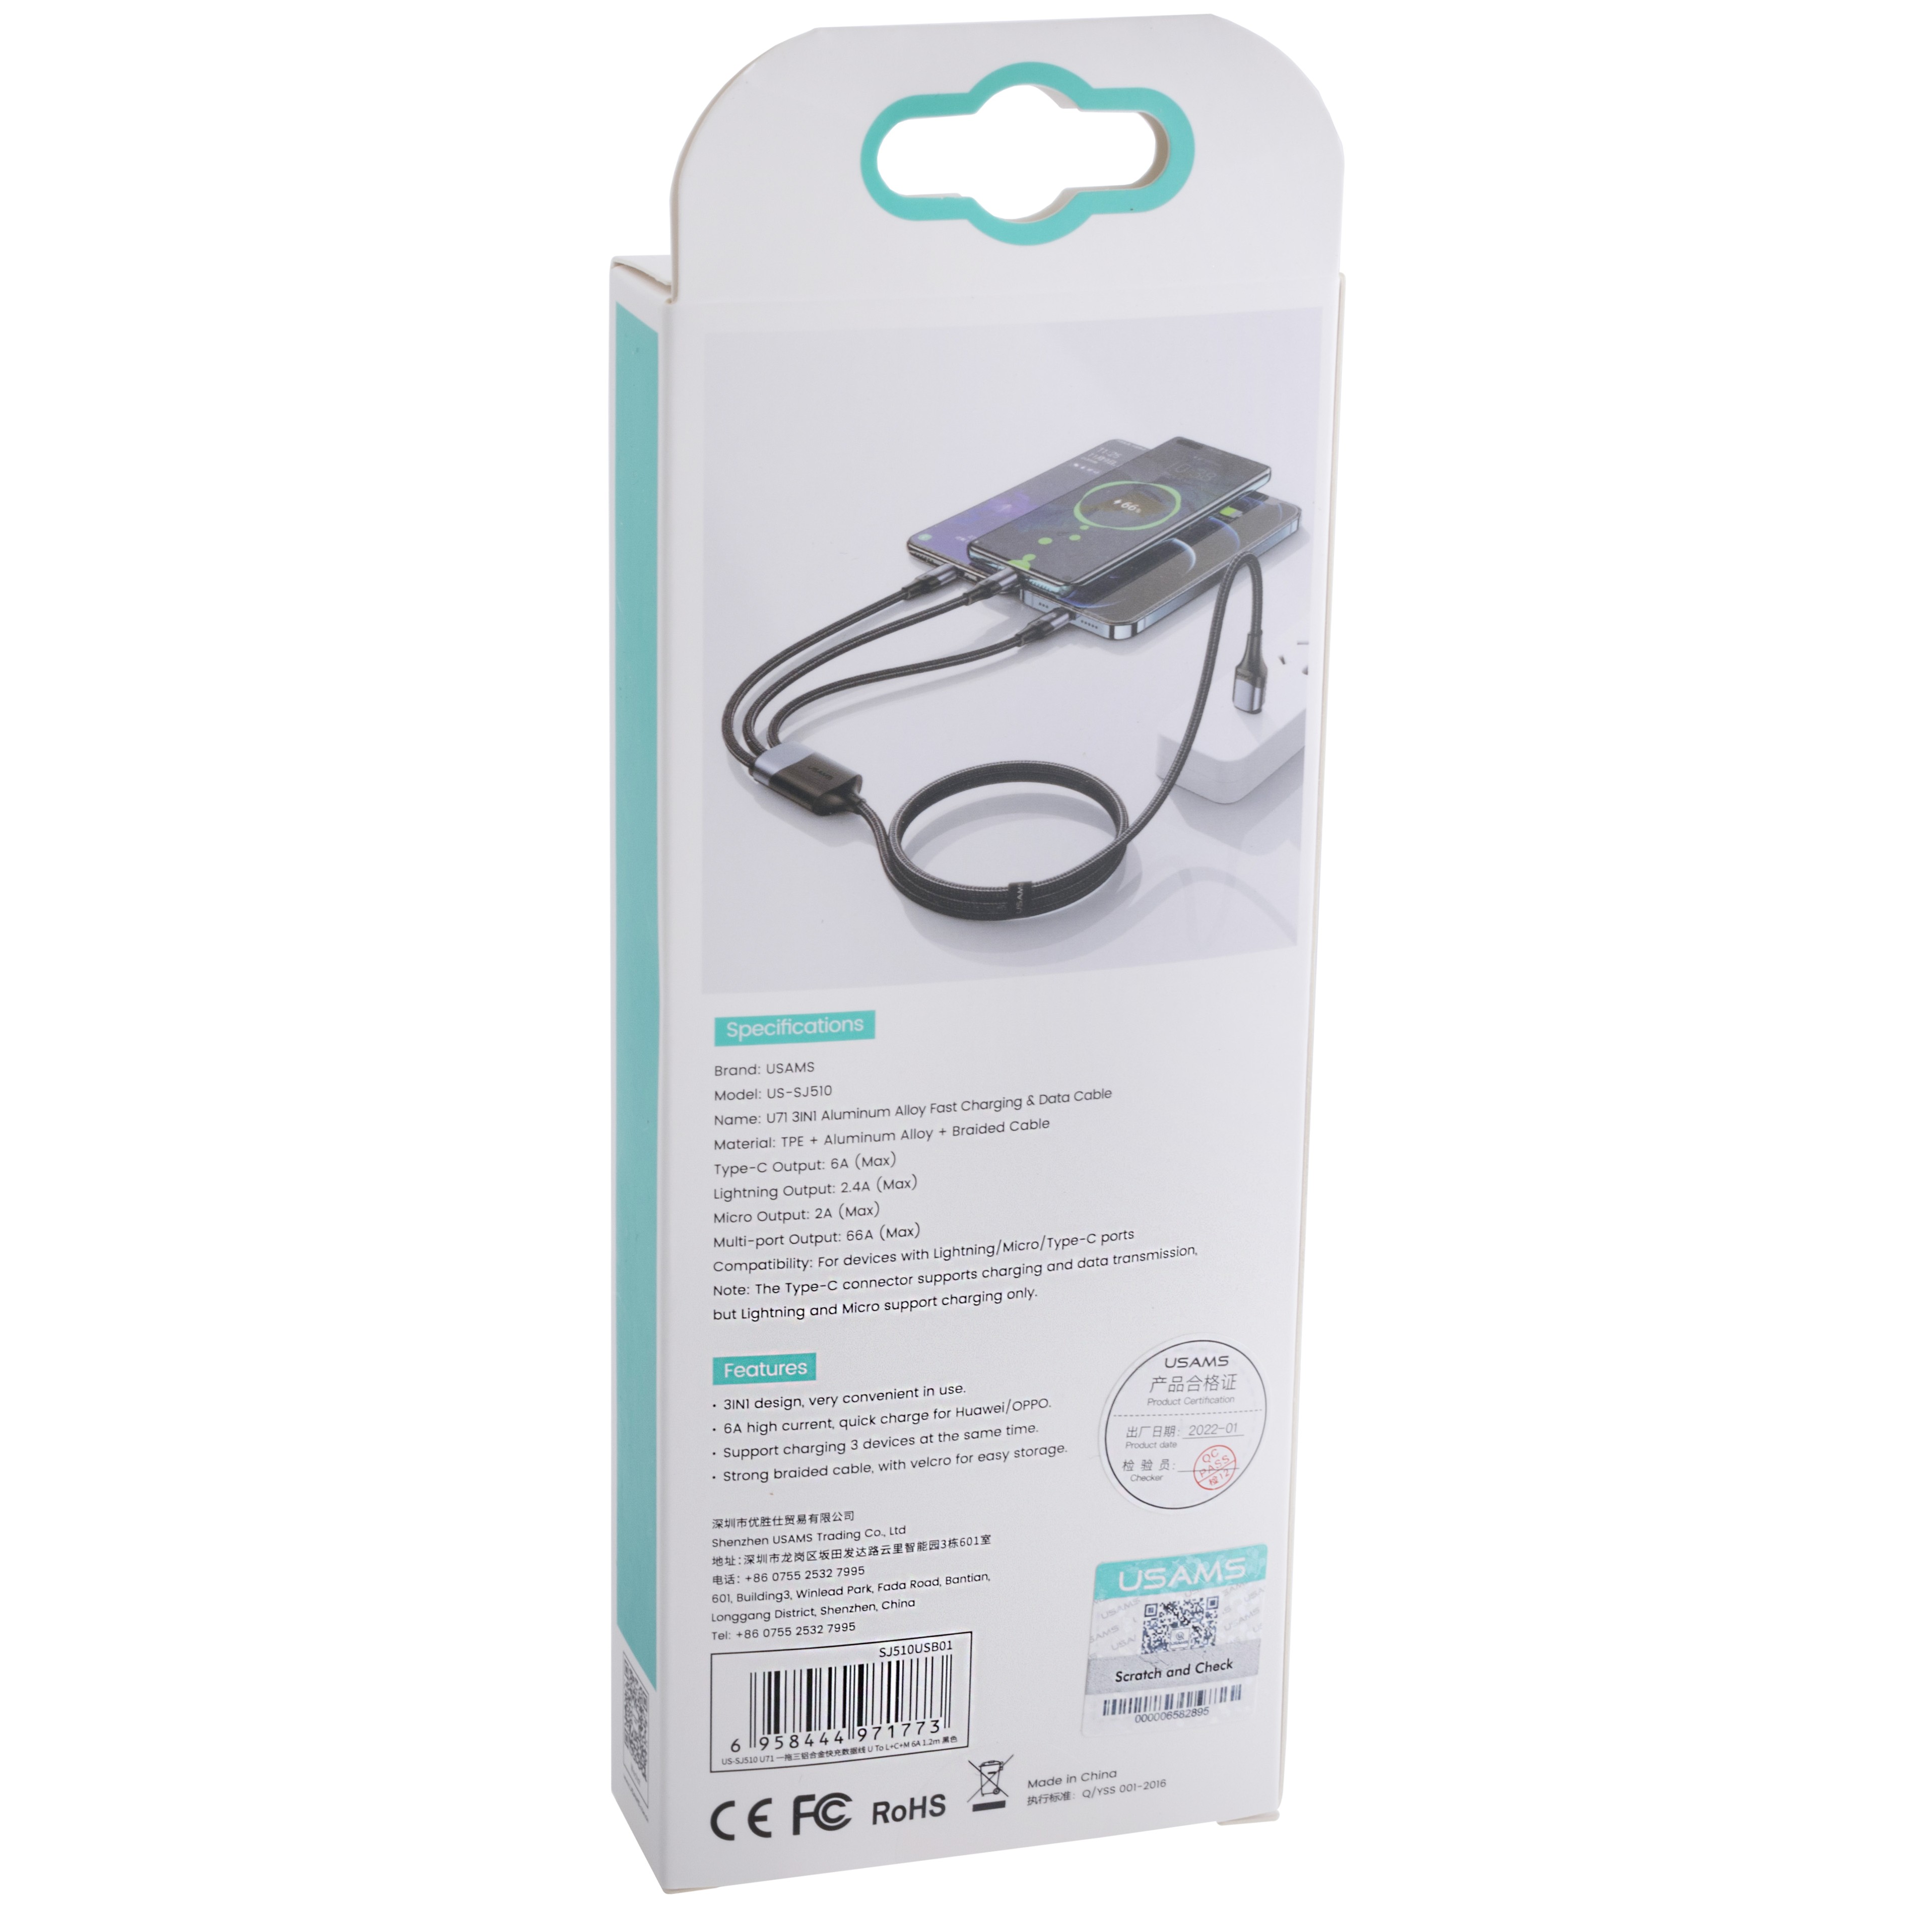 Кабель USB US-SJ510 U71 (USAMS) 3IN1 Aluminum Alloy Fast Charging & Data Cable 6A (USAMS) 1.2м чорний